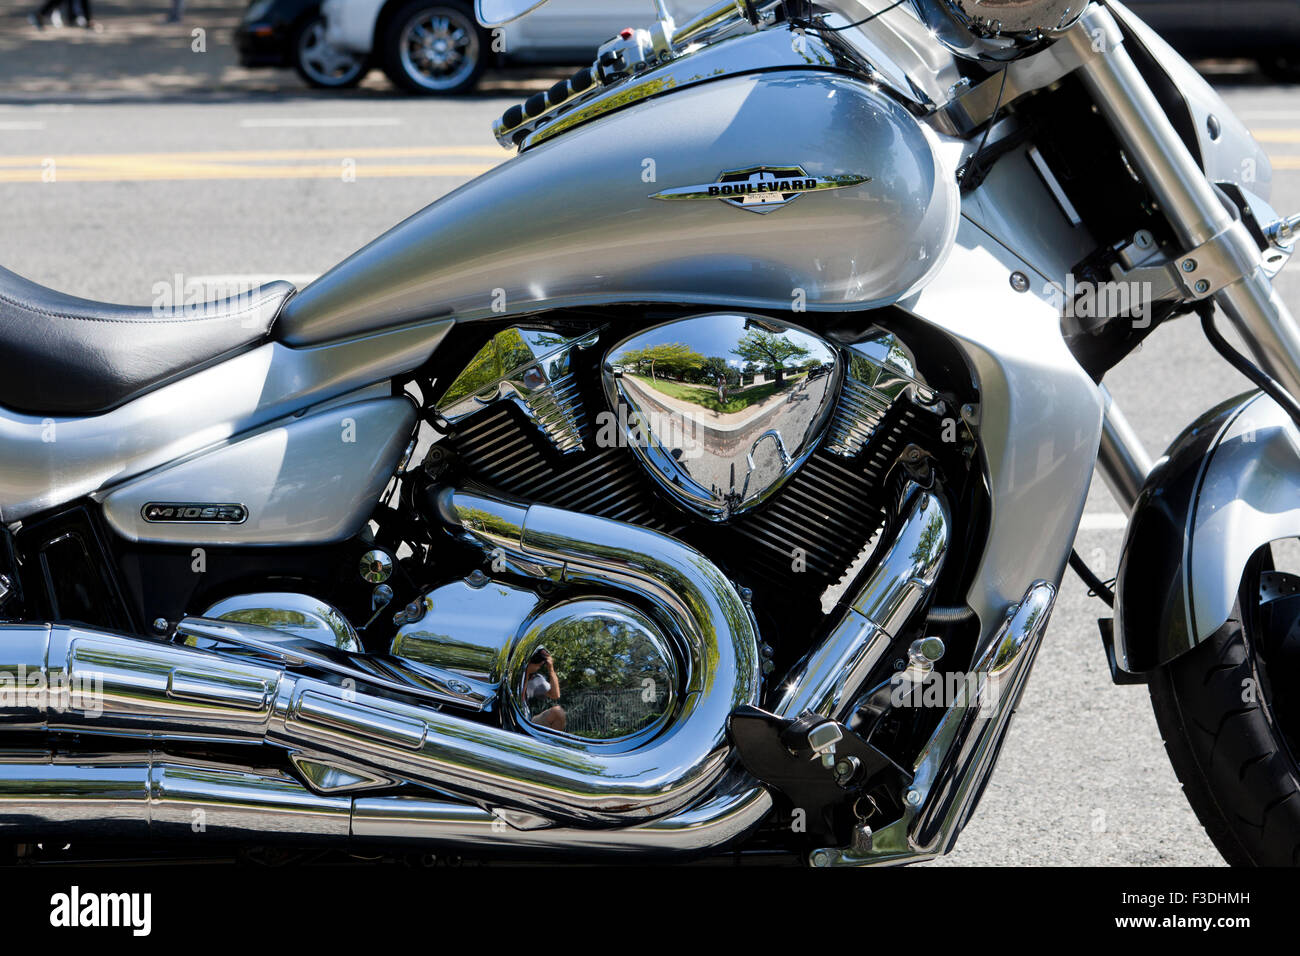 Suzuki Boulevard M109R motorcycle - USA Stock Photo